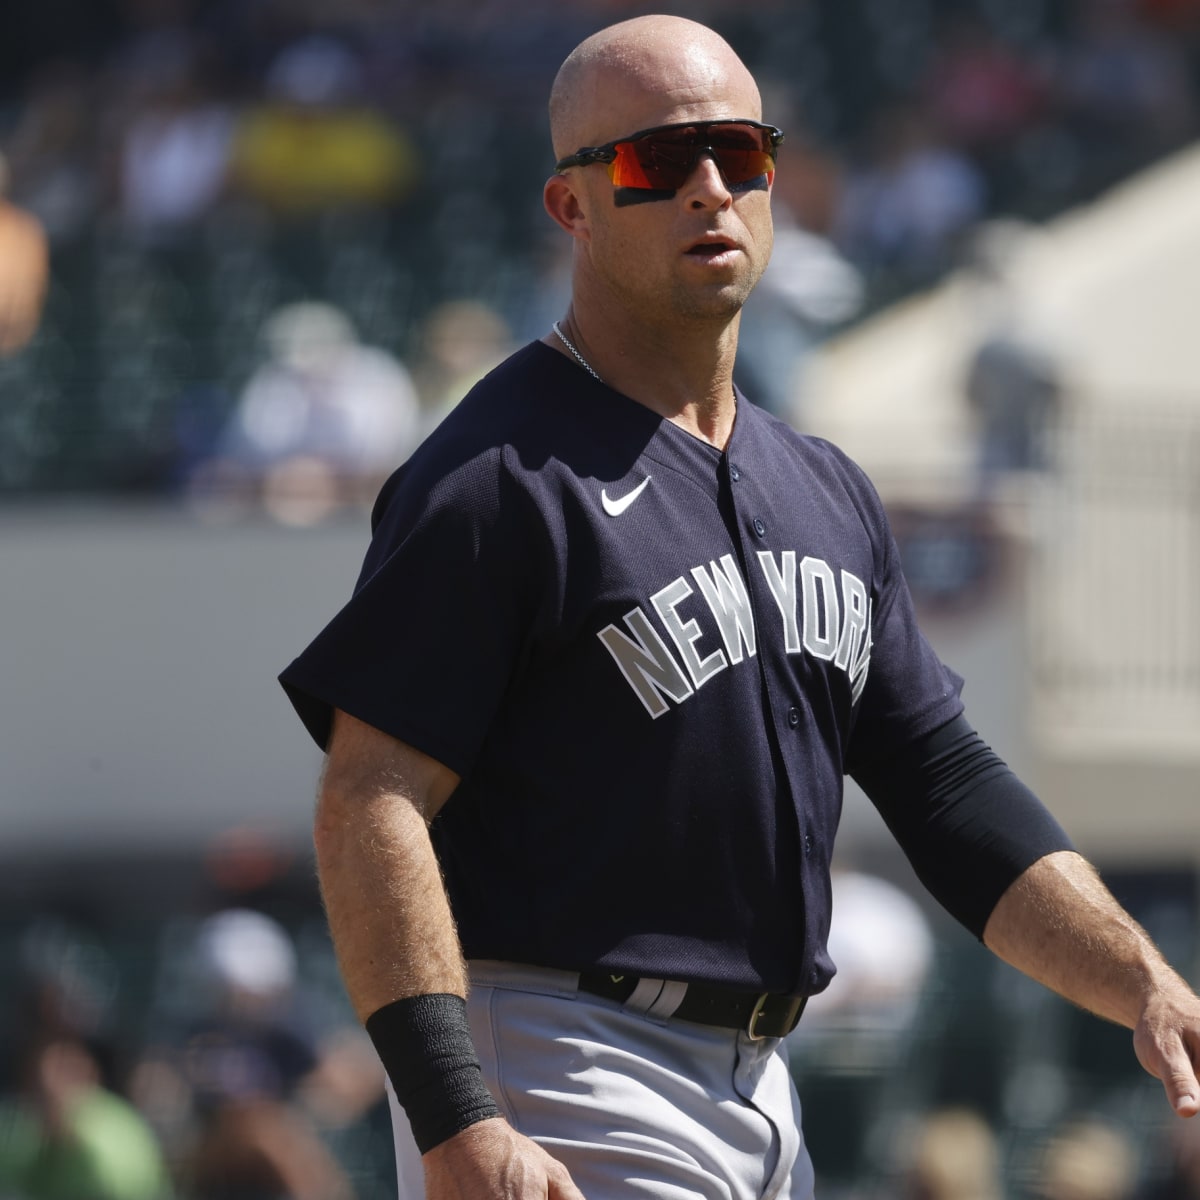 MLB rumors: Yankees, Brett Gardner contract talks pick up 